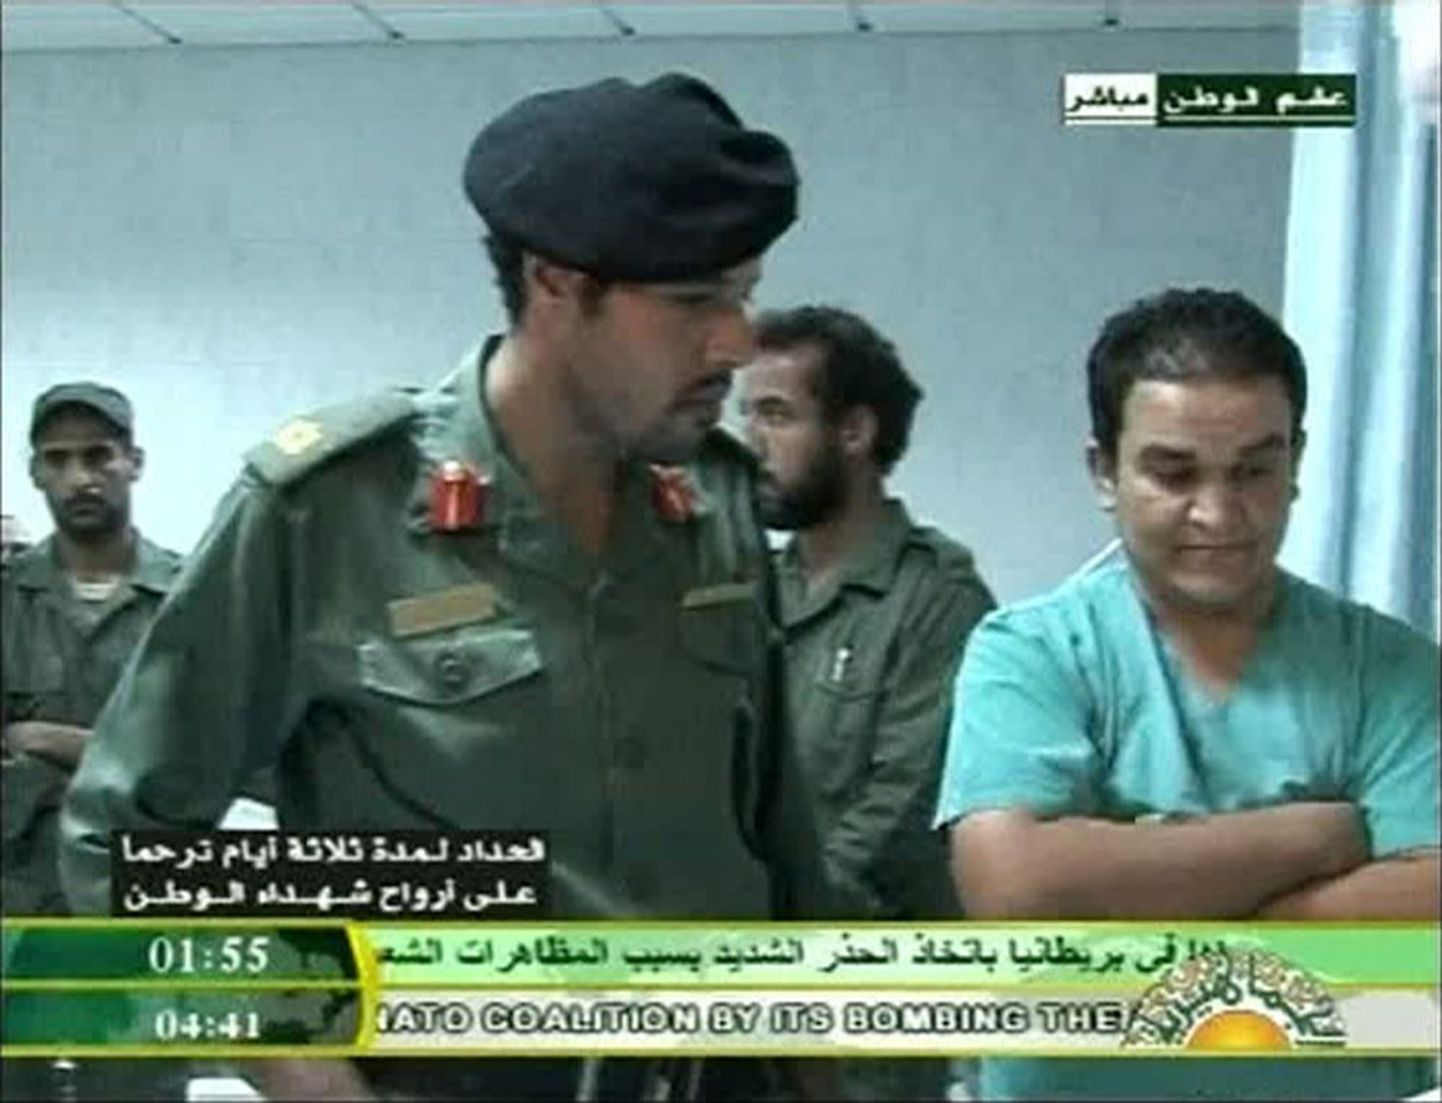 Khamis Gaddafi (keskel)